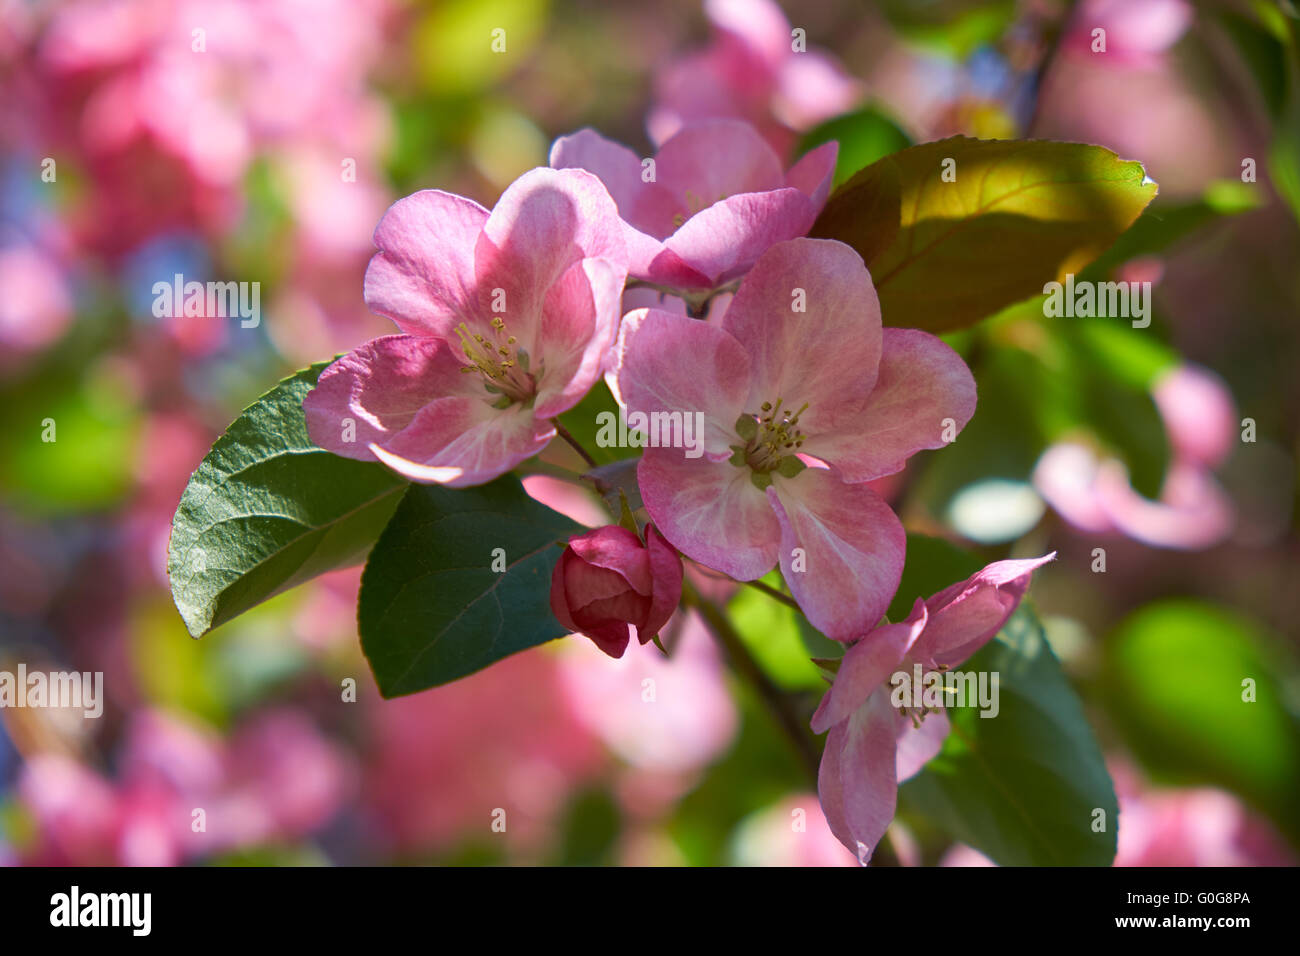 Pink apple-tree flowers Stock Photo